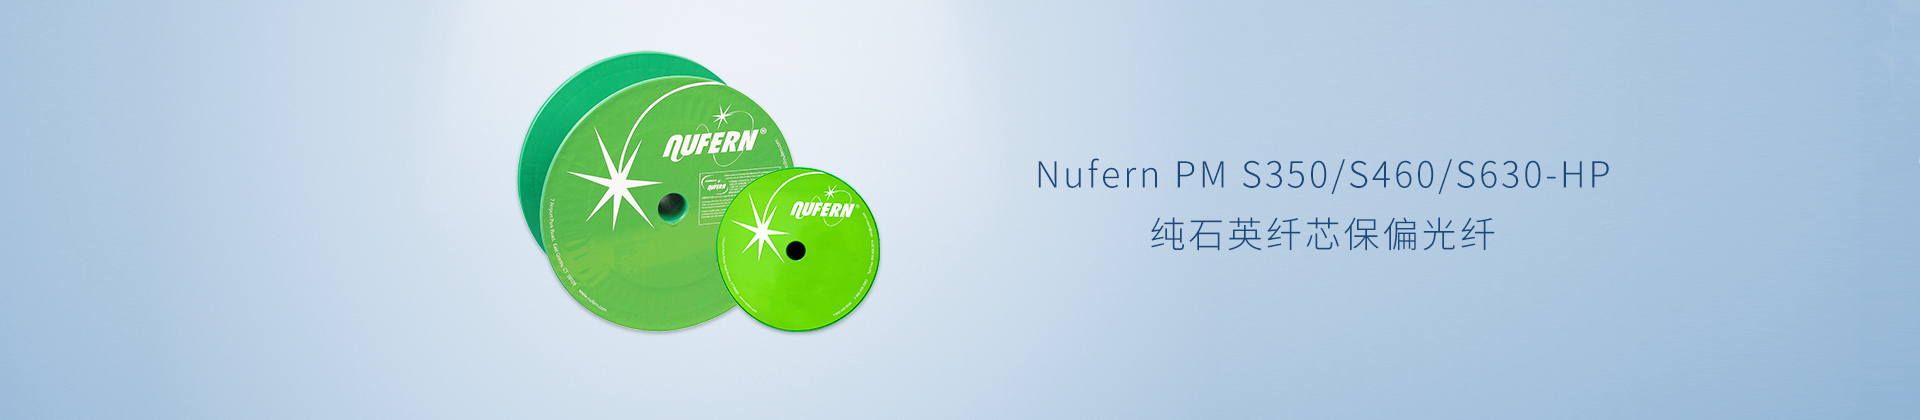 Nufern PM S350/S460/S630-HP纯石英纤芯保偏光纤